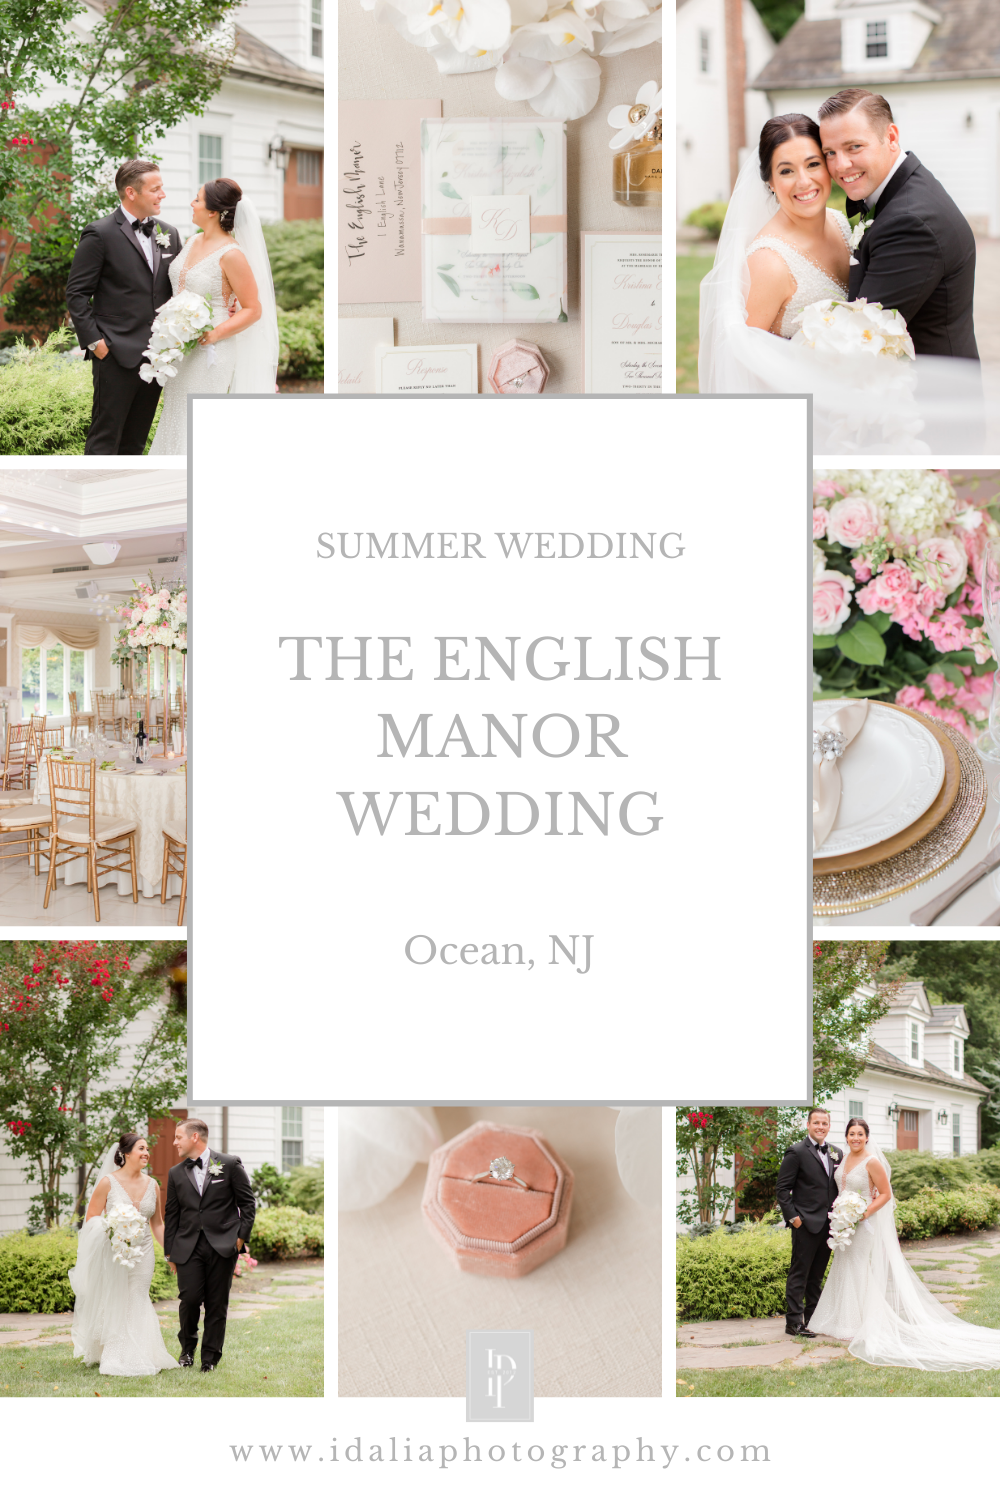 Romantic wedding at The English Manor photographed by Idalia Photogrpahy